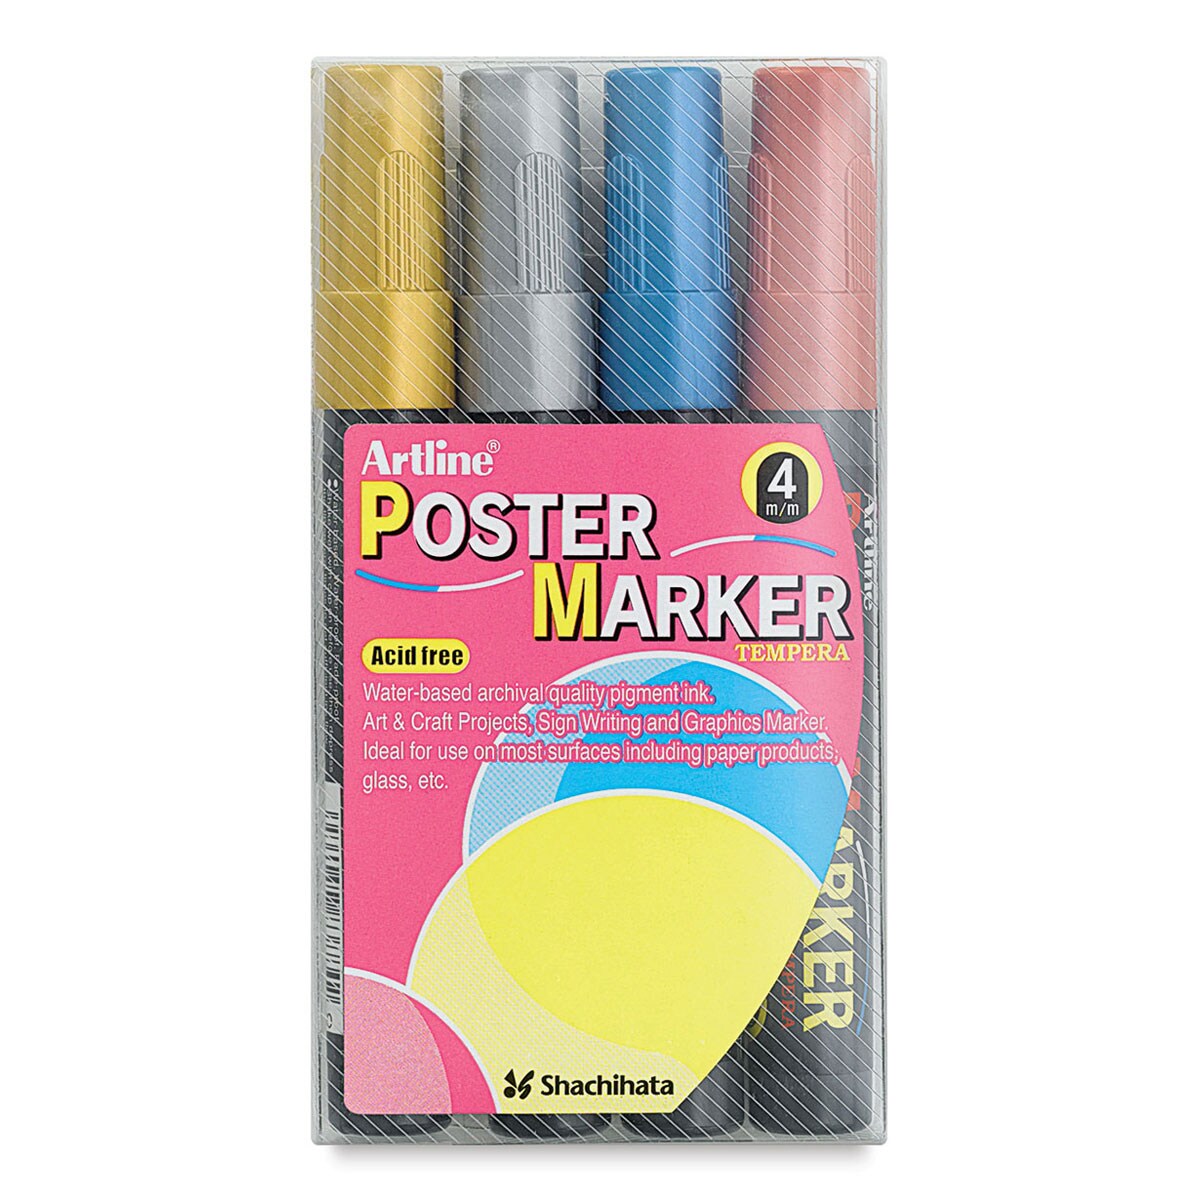 Artline Poster Markers - 4 mm Tip, Metallic Colors, Set of 4